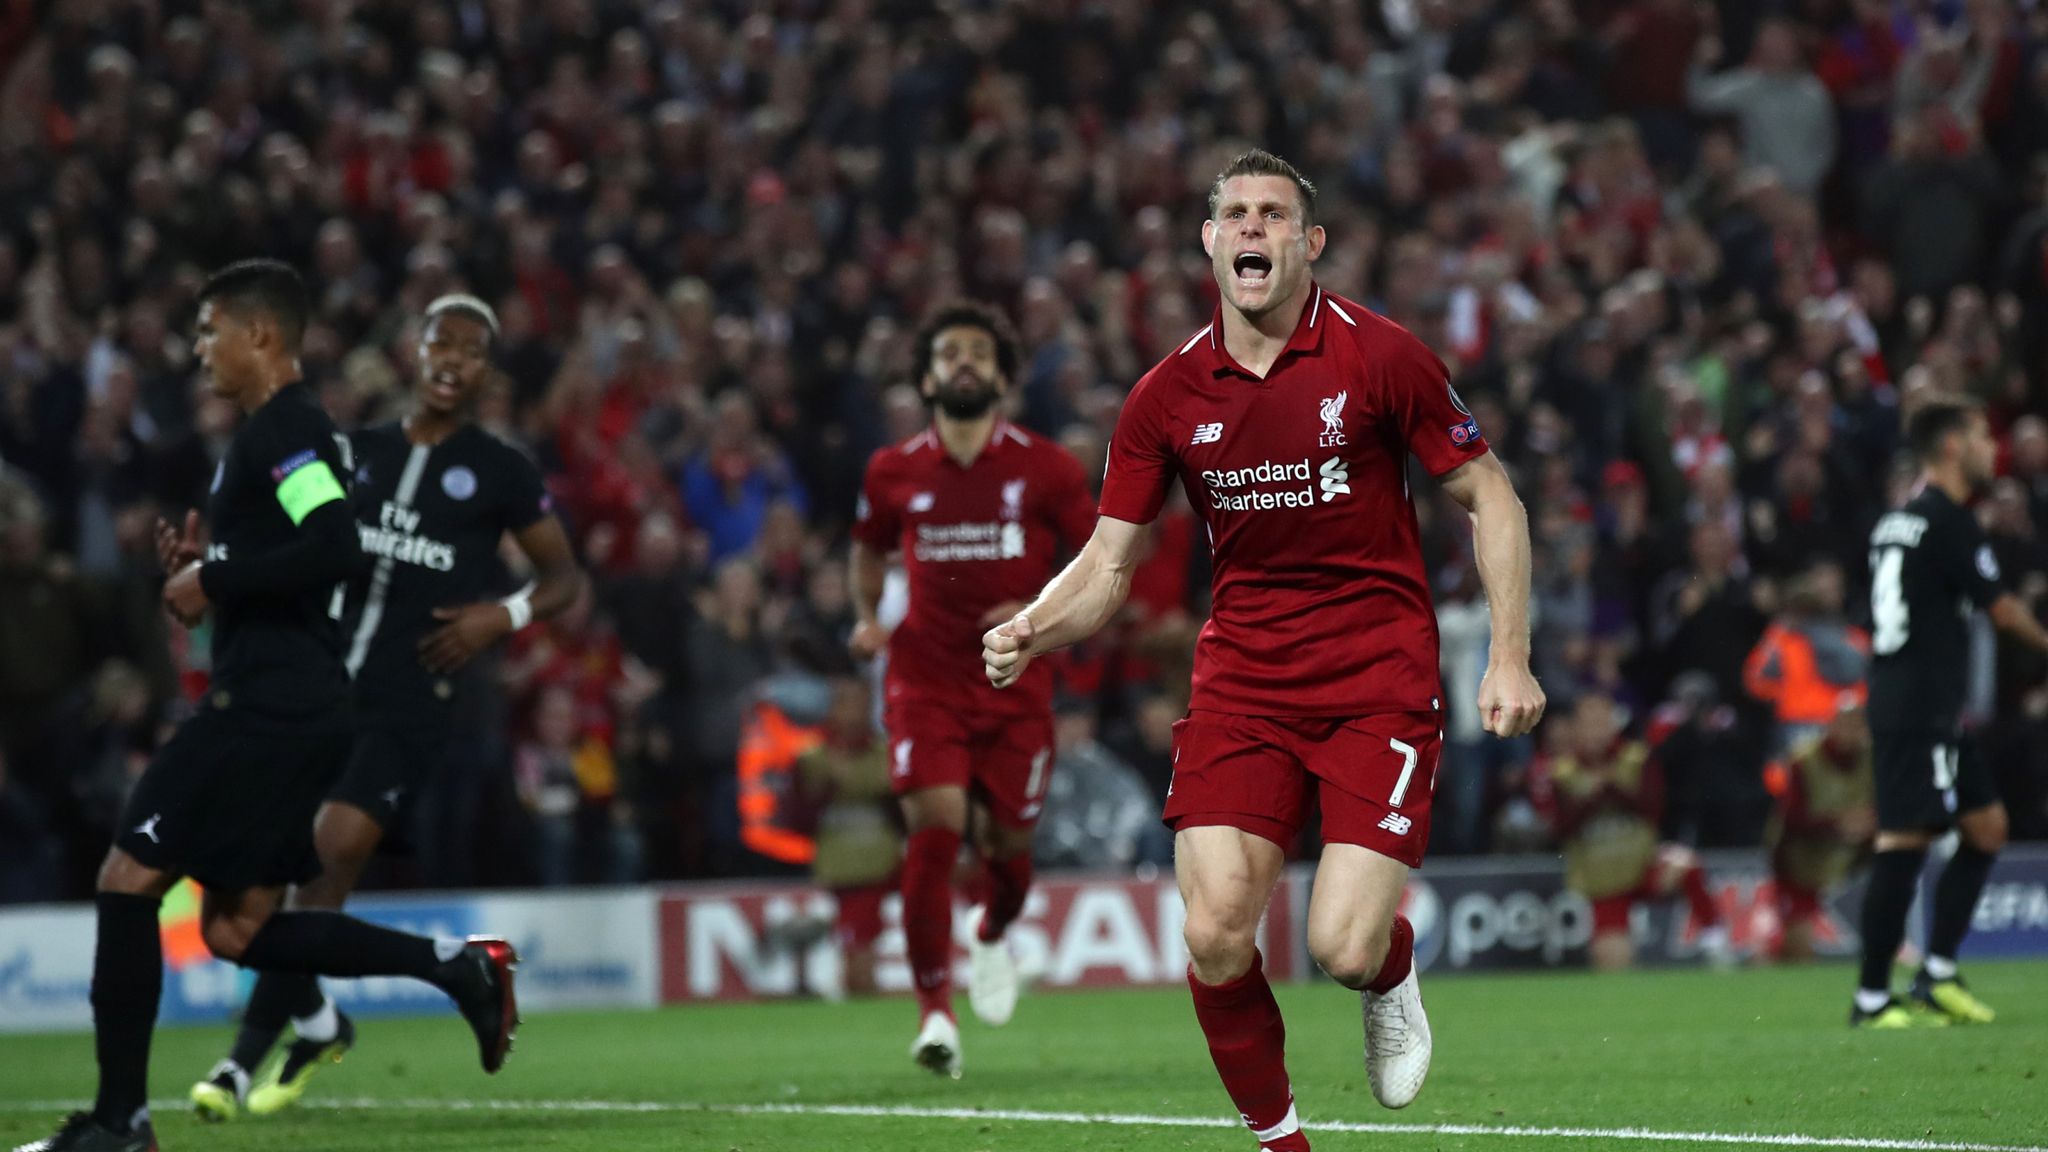 Liverpool 3 - 2 PSG - Match Report & Highlights